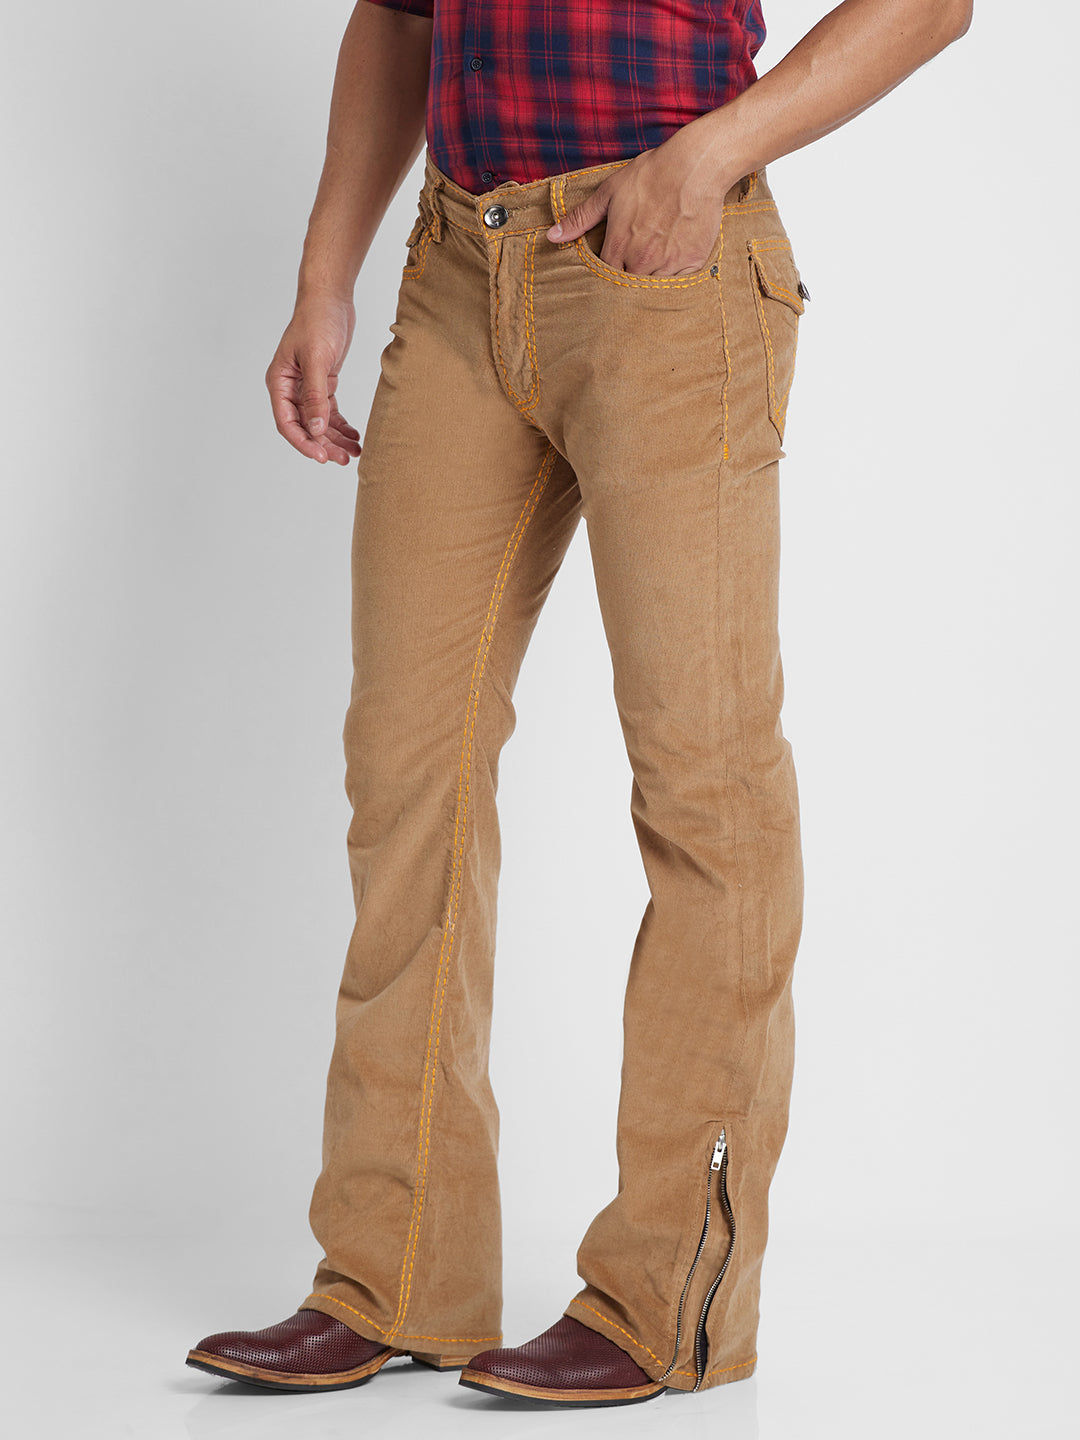 HAORUN Men Corduroy Bell Bottom Flares Pants Slim Fit 60s 70s Vintage Bootcut  Trousers - Walmart.com